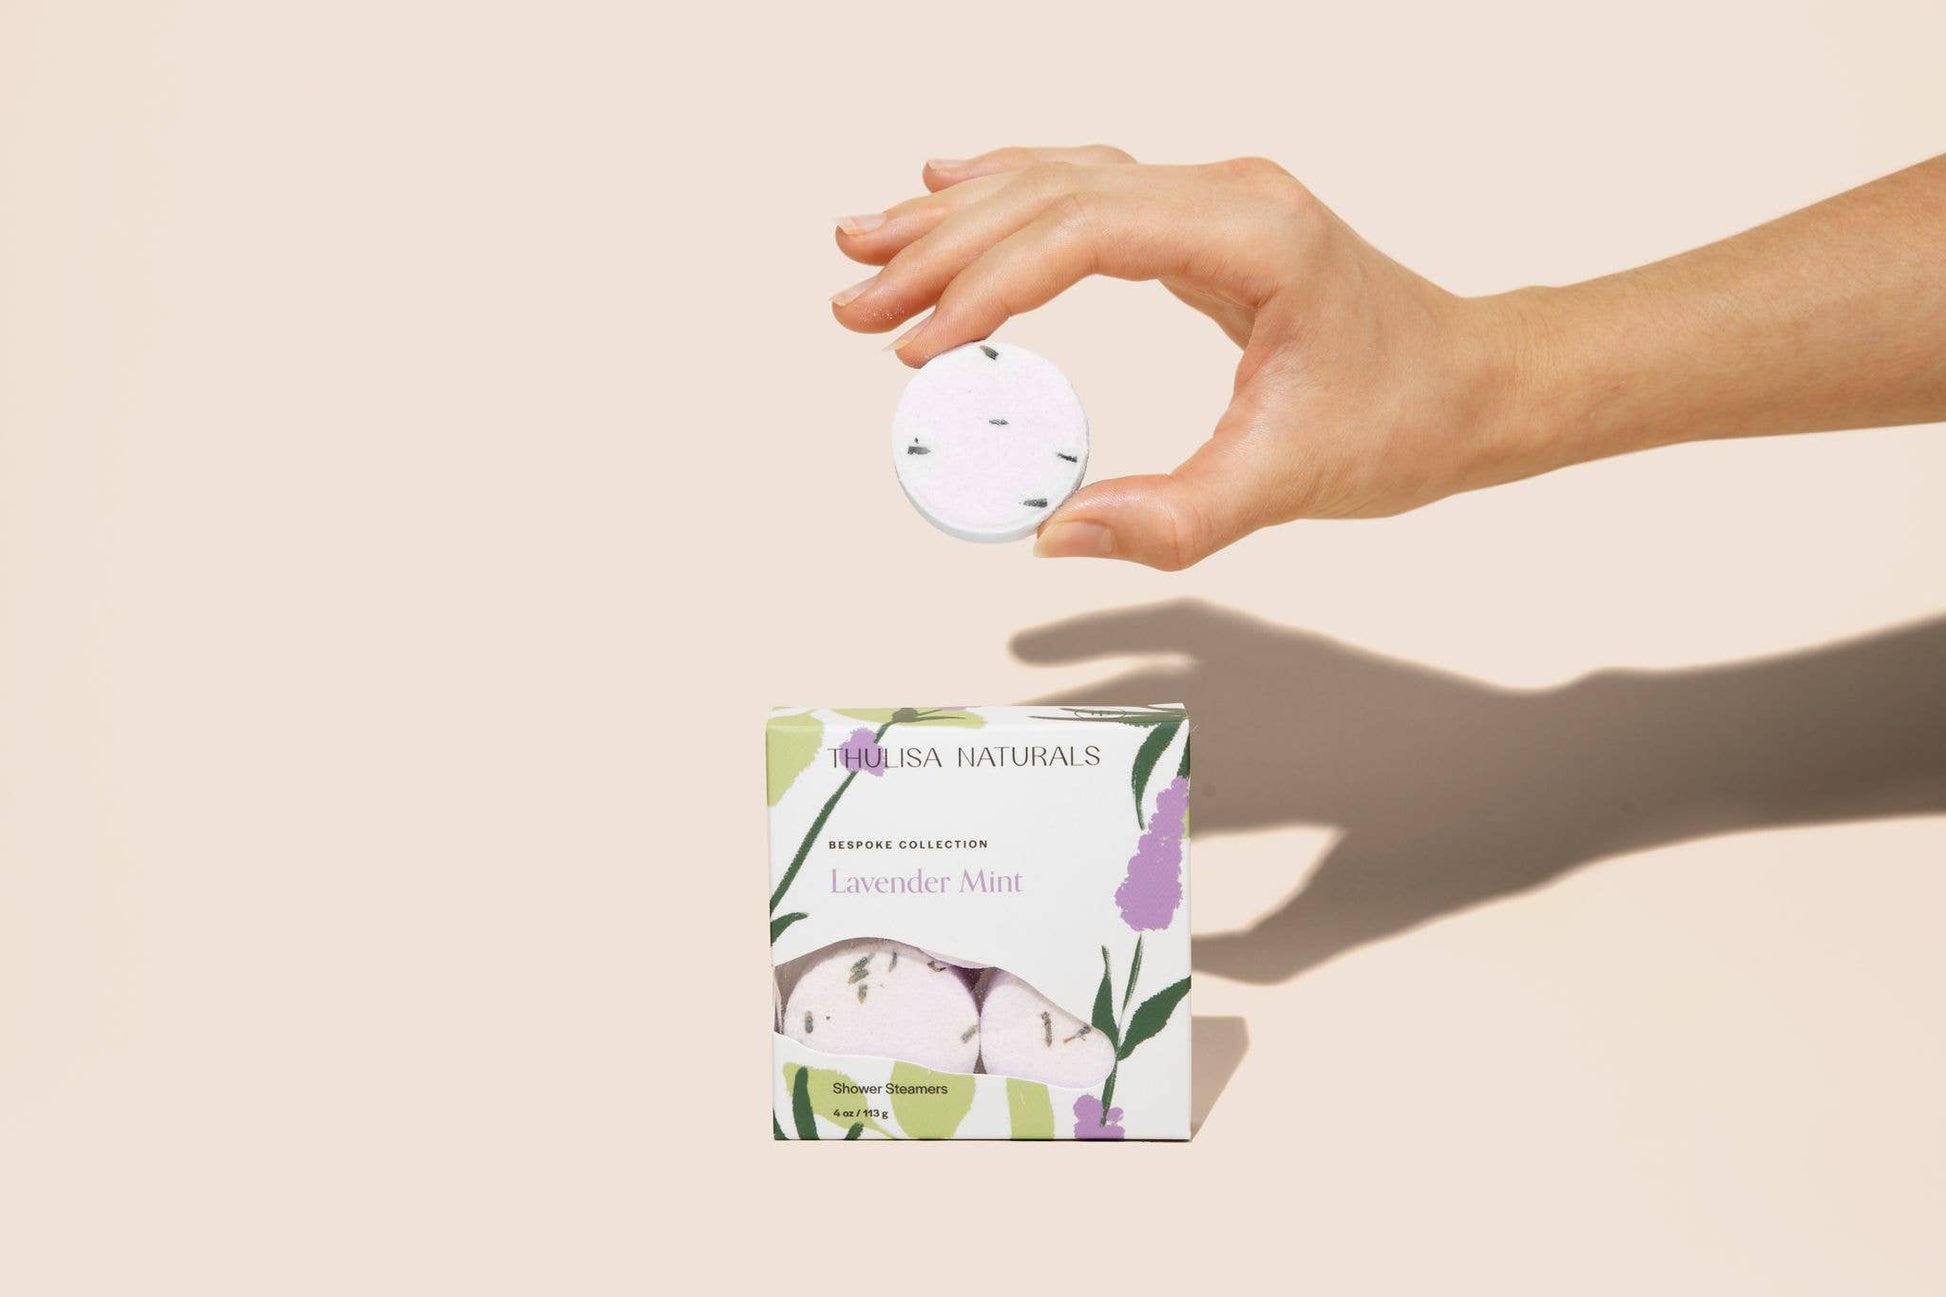 Shower Steamer//Lavender Mint// 4 pack Home Goods Thulisa Naturals | Bath + Body   